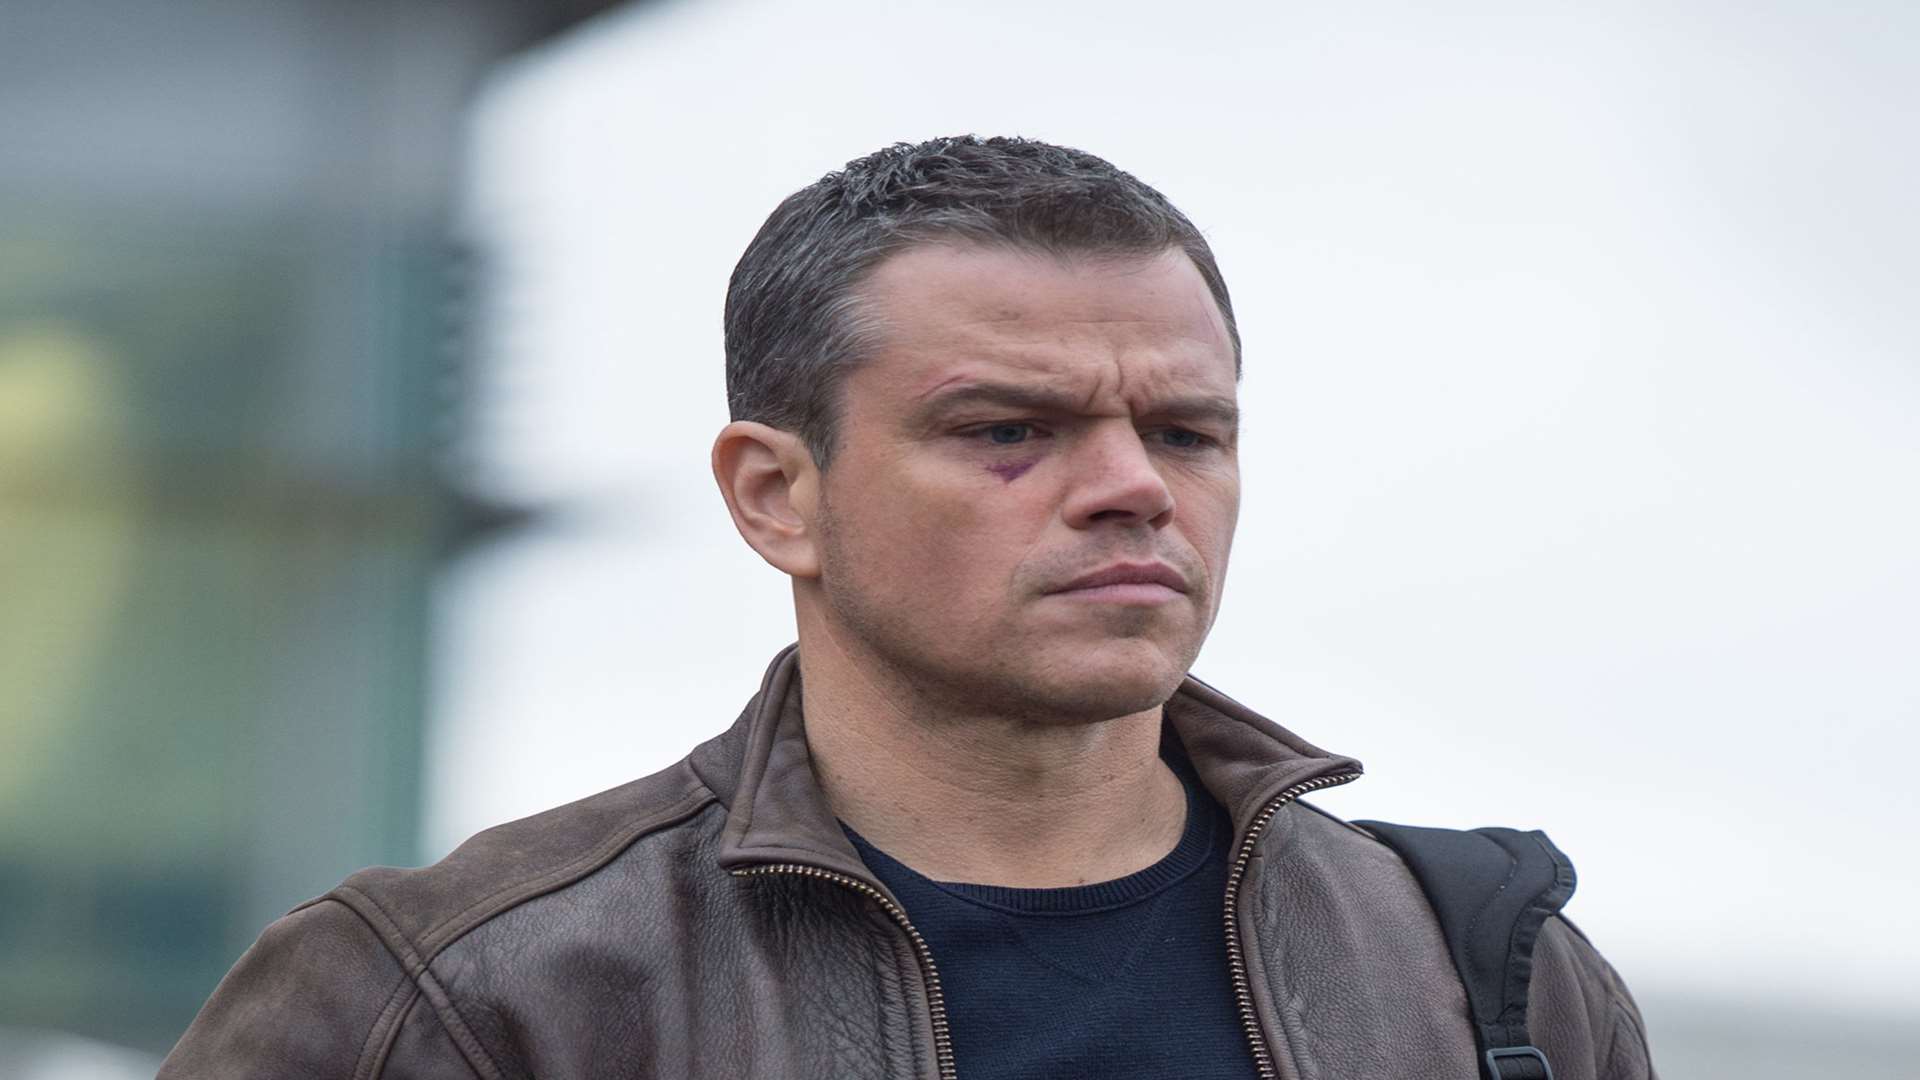 Matt Damon reprises his role as Jason Bourne. Picture: PA Photo/Universal